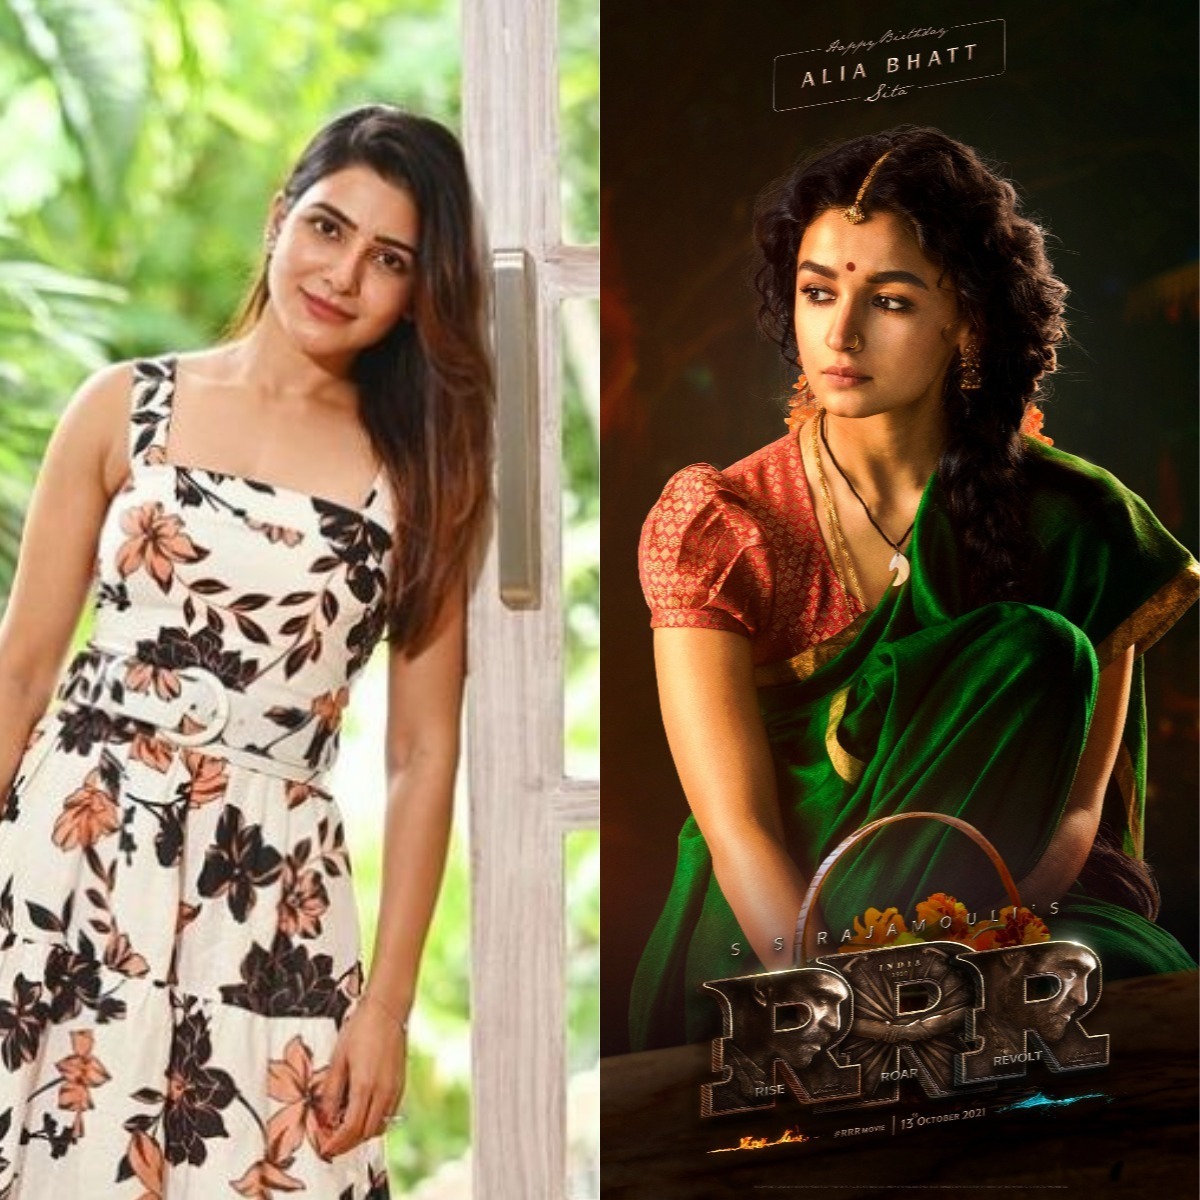 Alia Bhatt’s look as Sita in RRR: Samantha Akkineni says she inspires her to push harder